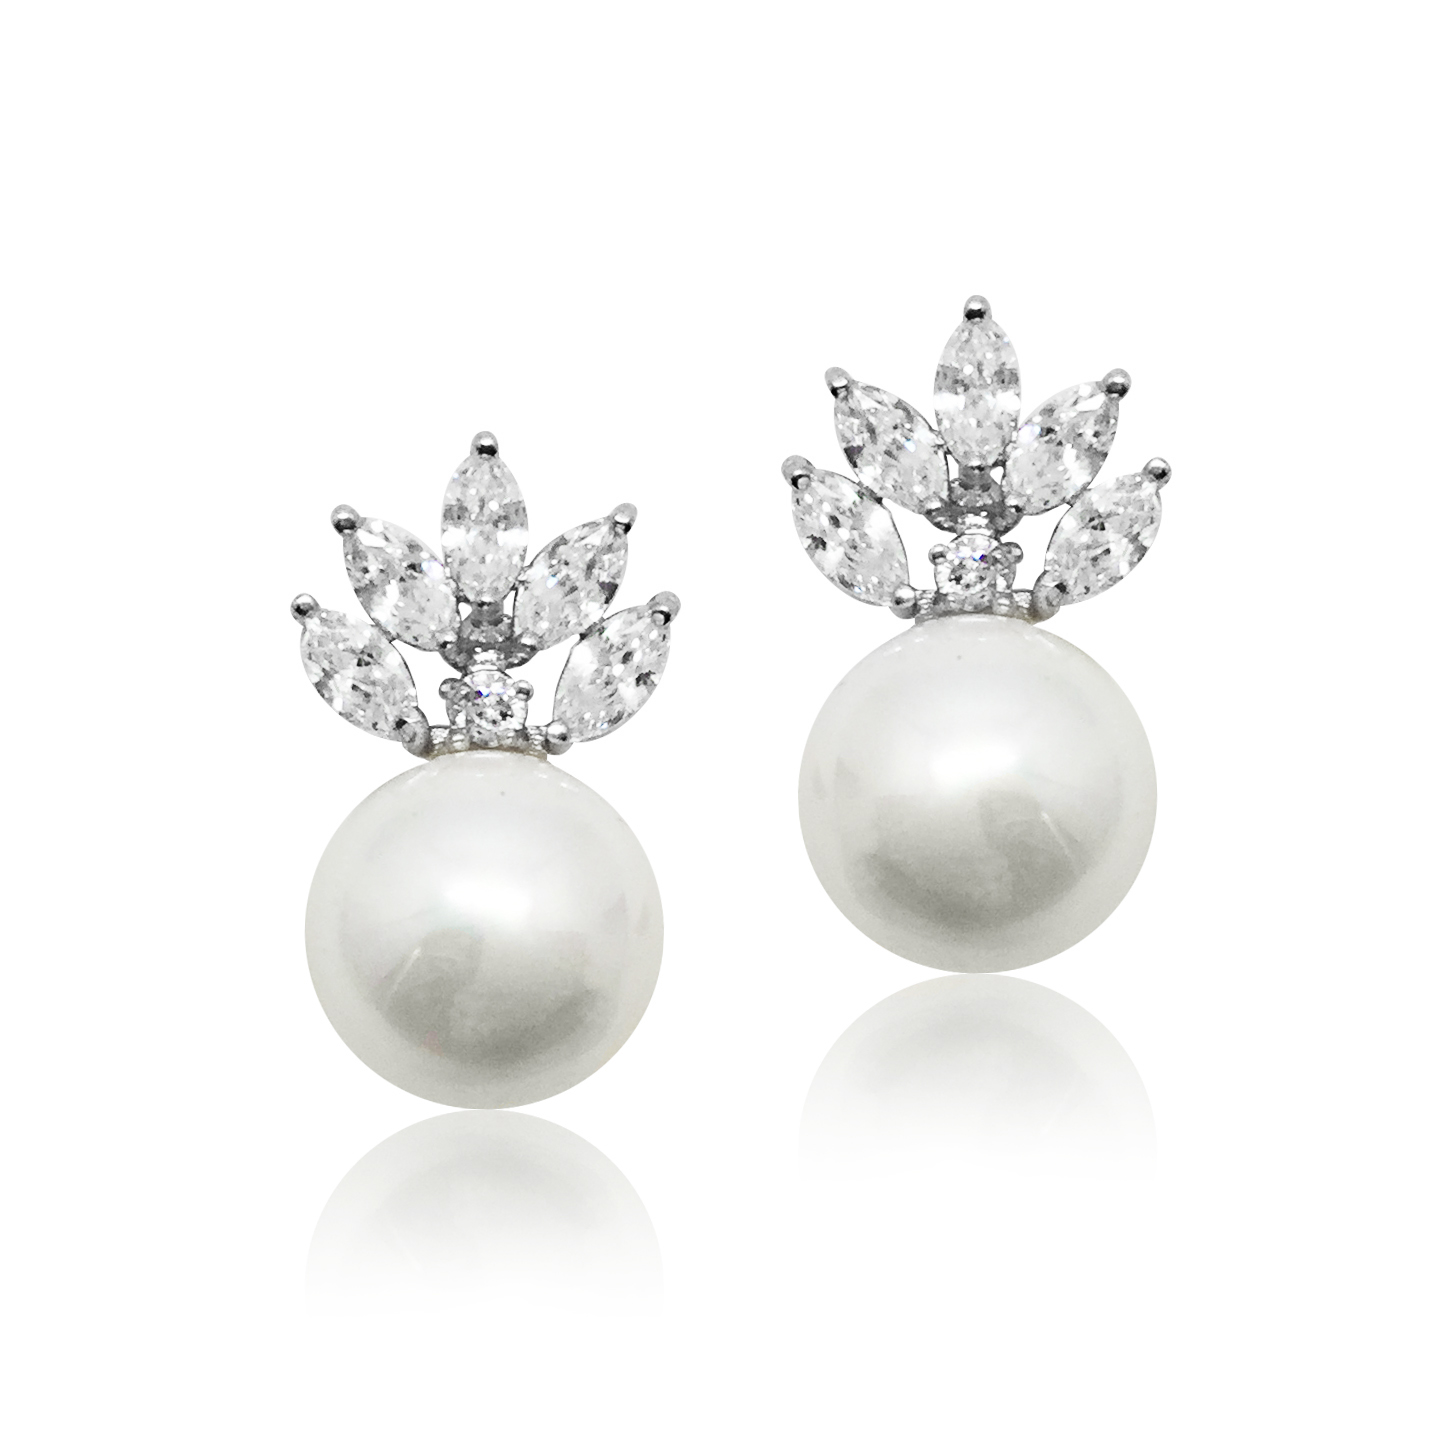 Small pearl earrings|Felicia|Jeanette Maree|Shop Online Now